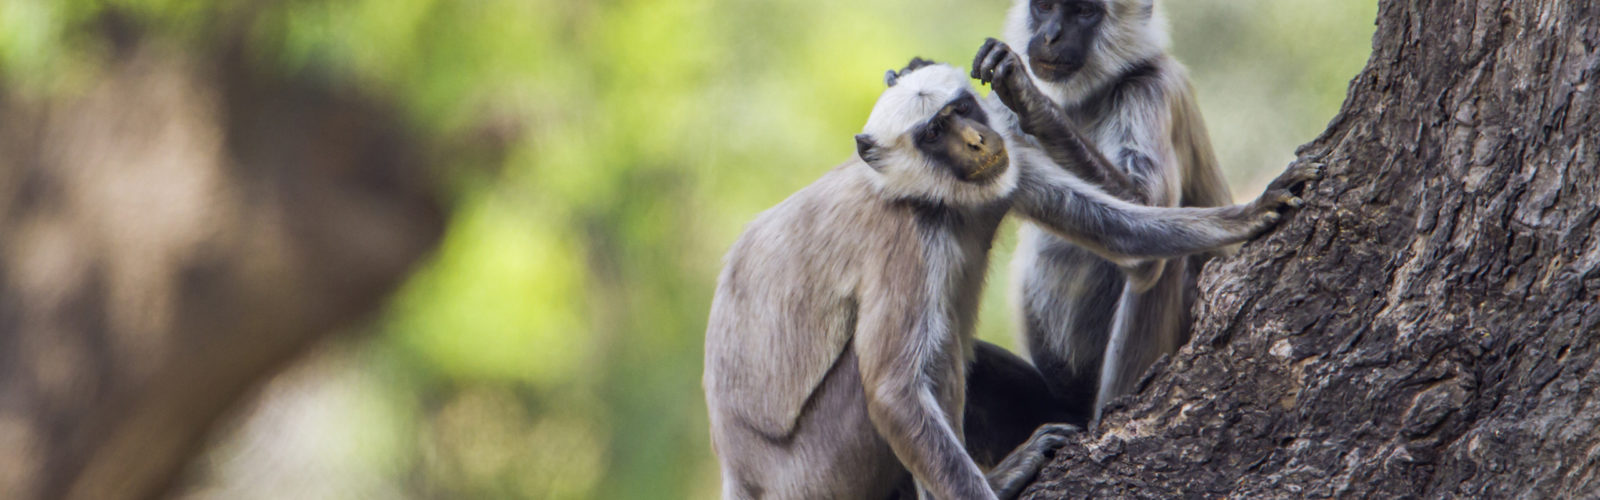 bardia-monkeys